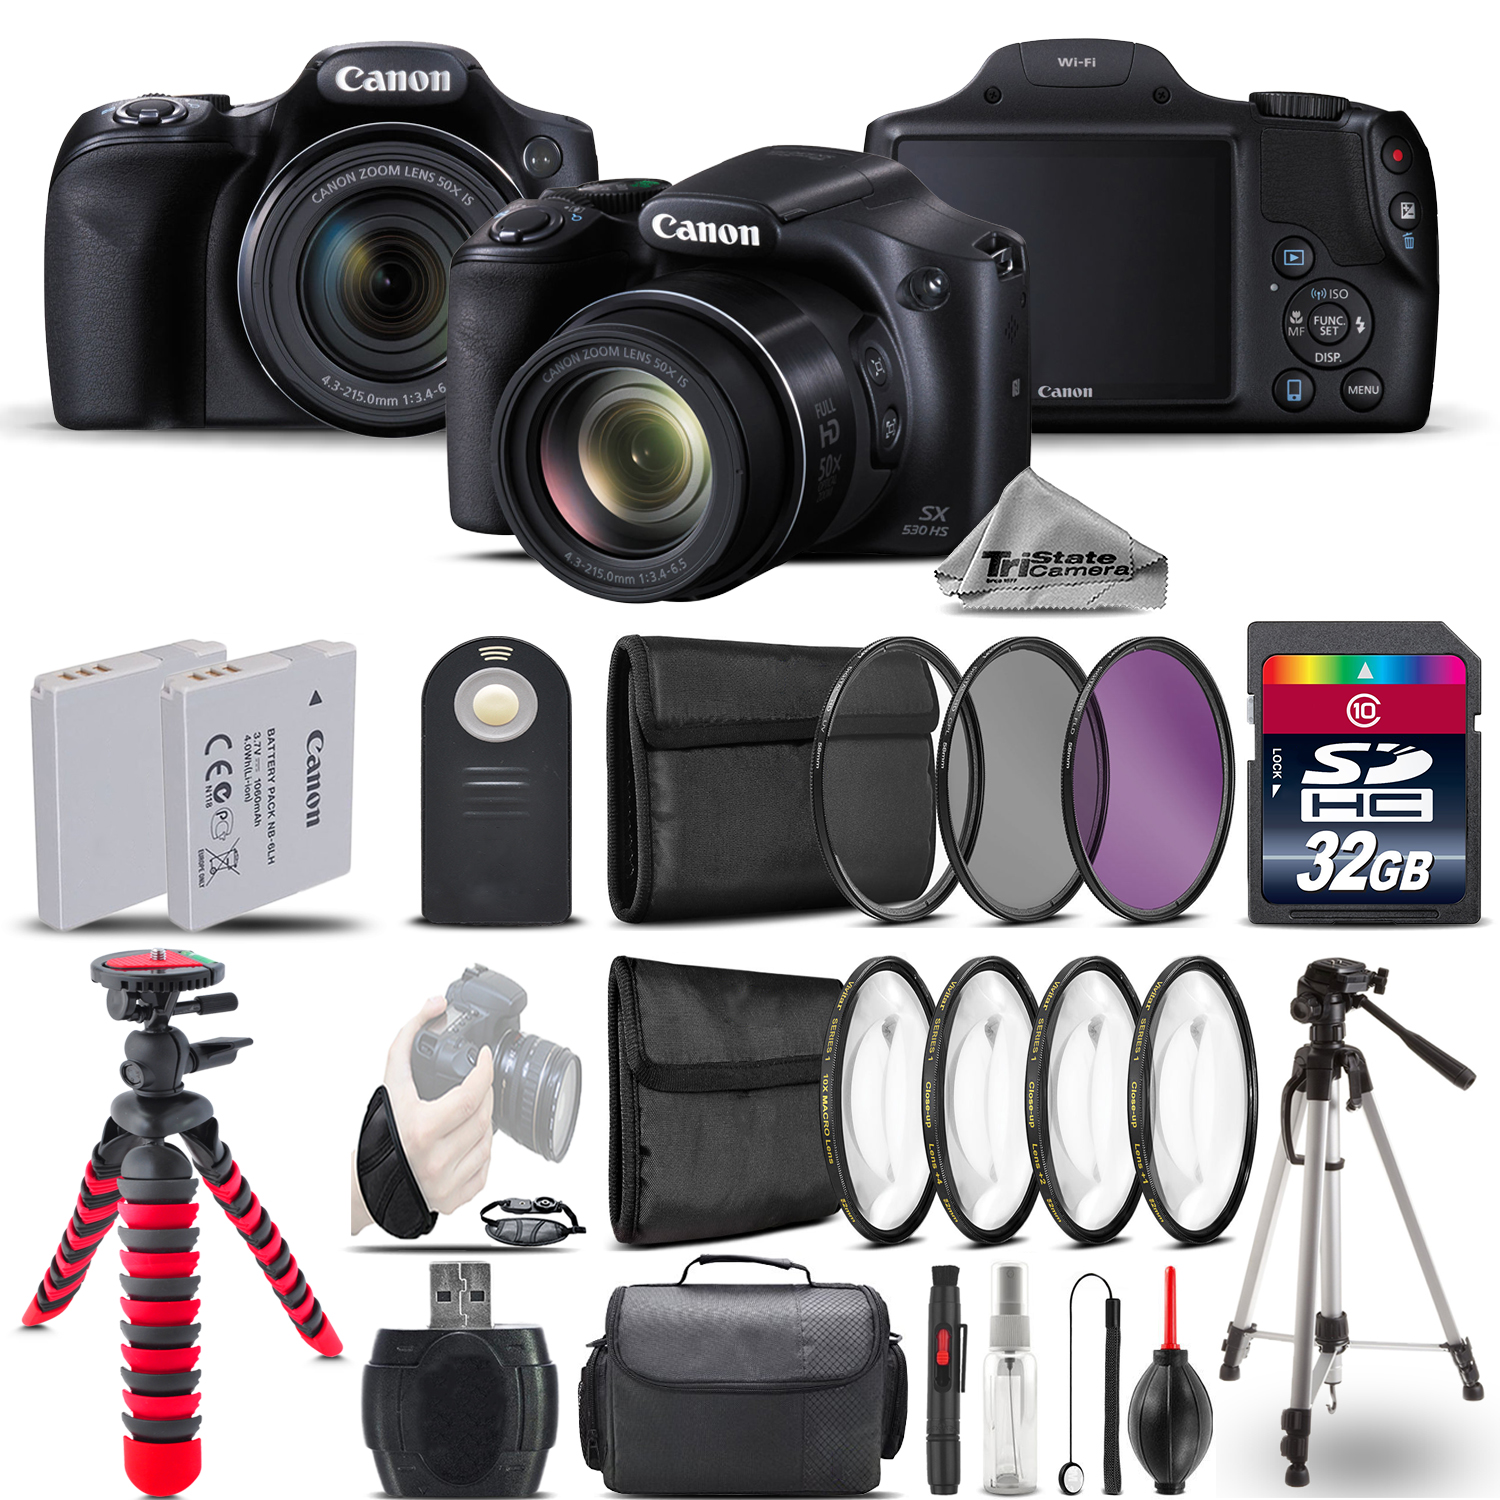 PowerShot SX530 HS Digital Camera + 2 x Tripod  + EXT BAT + Filter - 32GB *FREE SHIPPING*